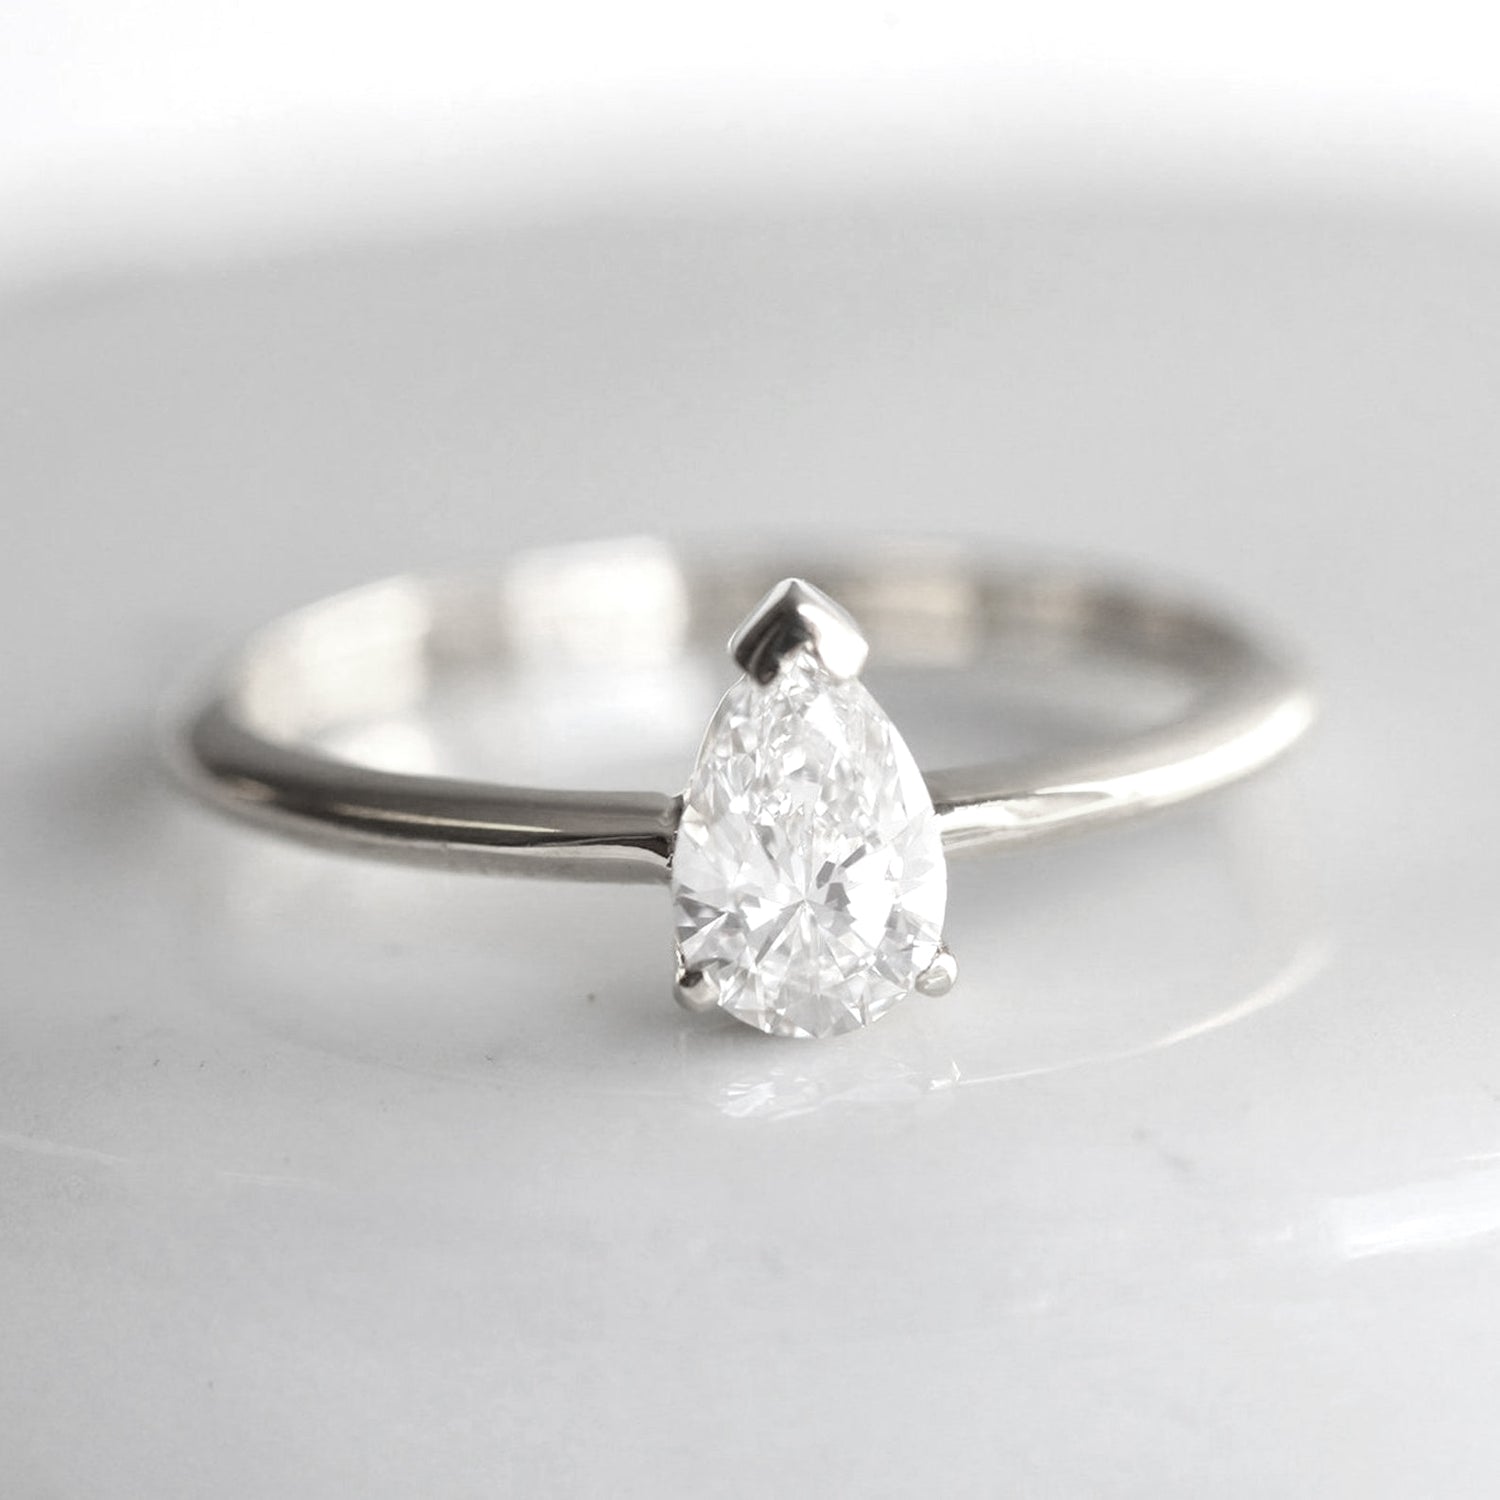 Pear Cut Diamond Engagement Ring in Platinum.